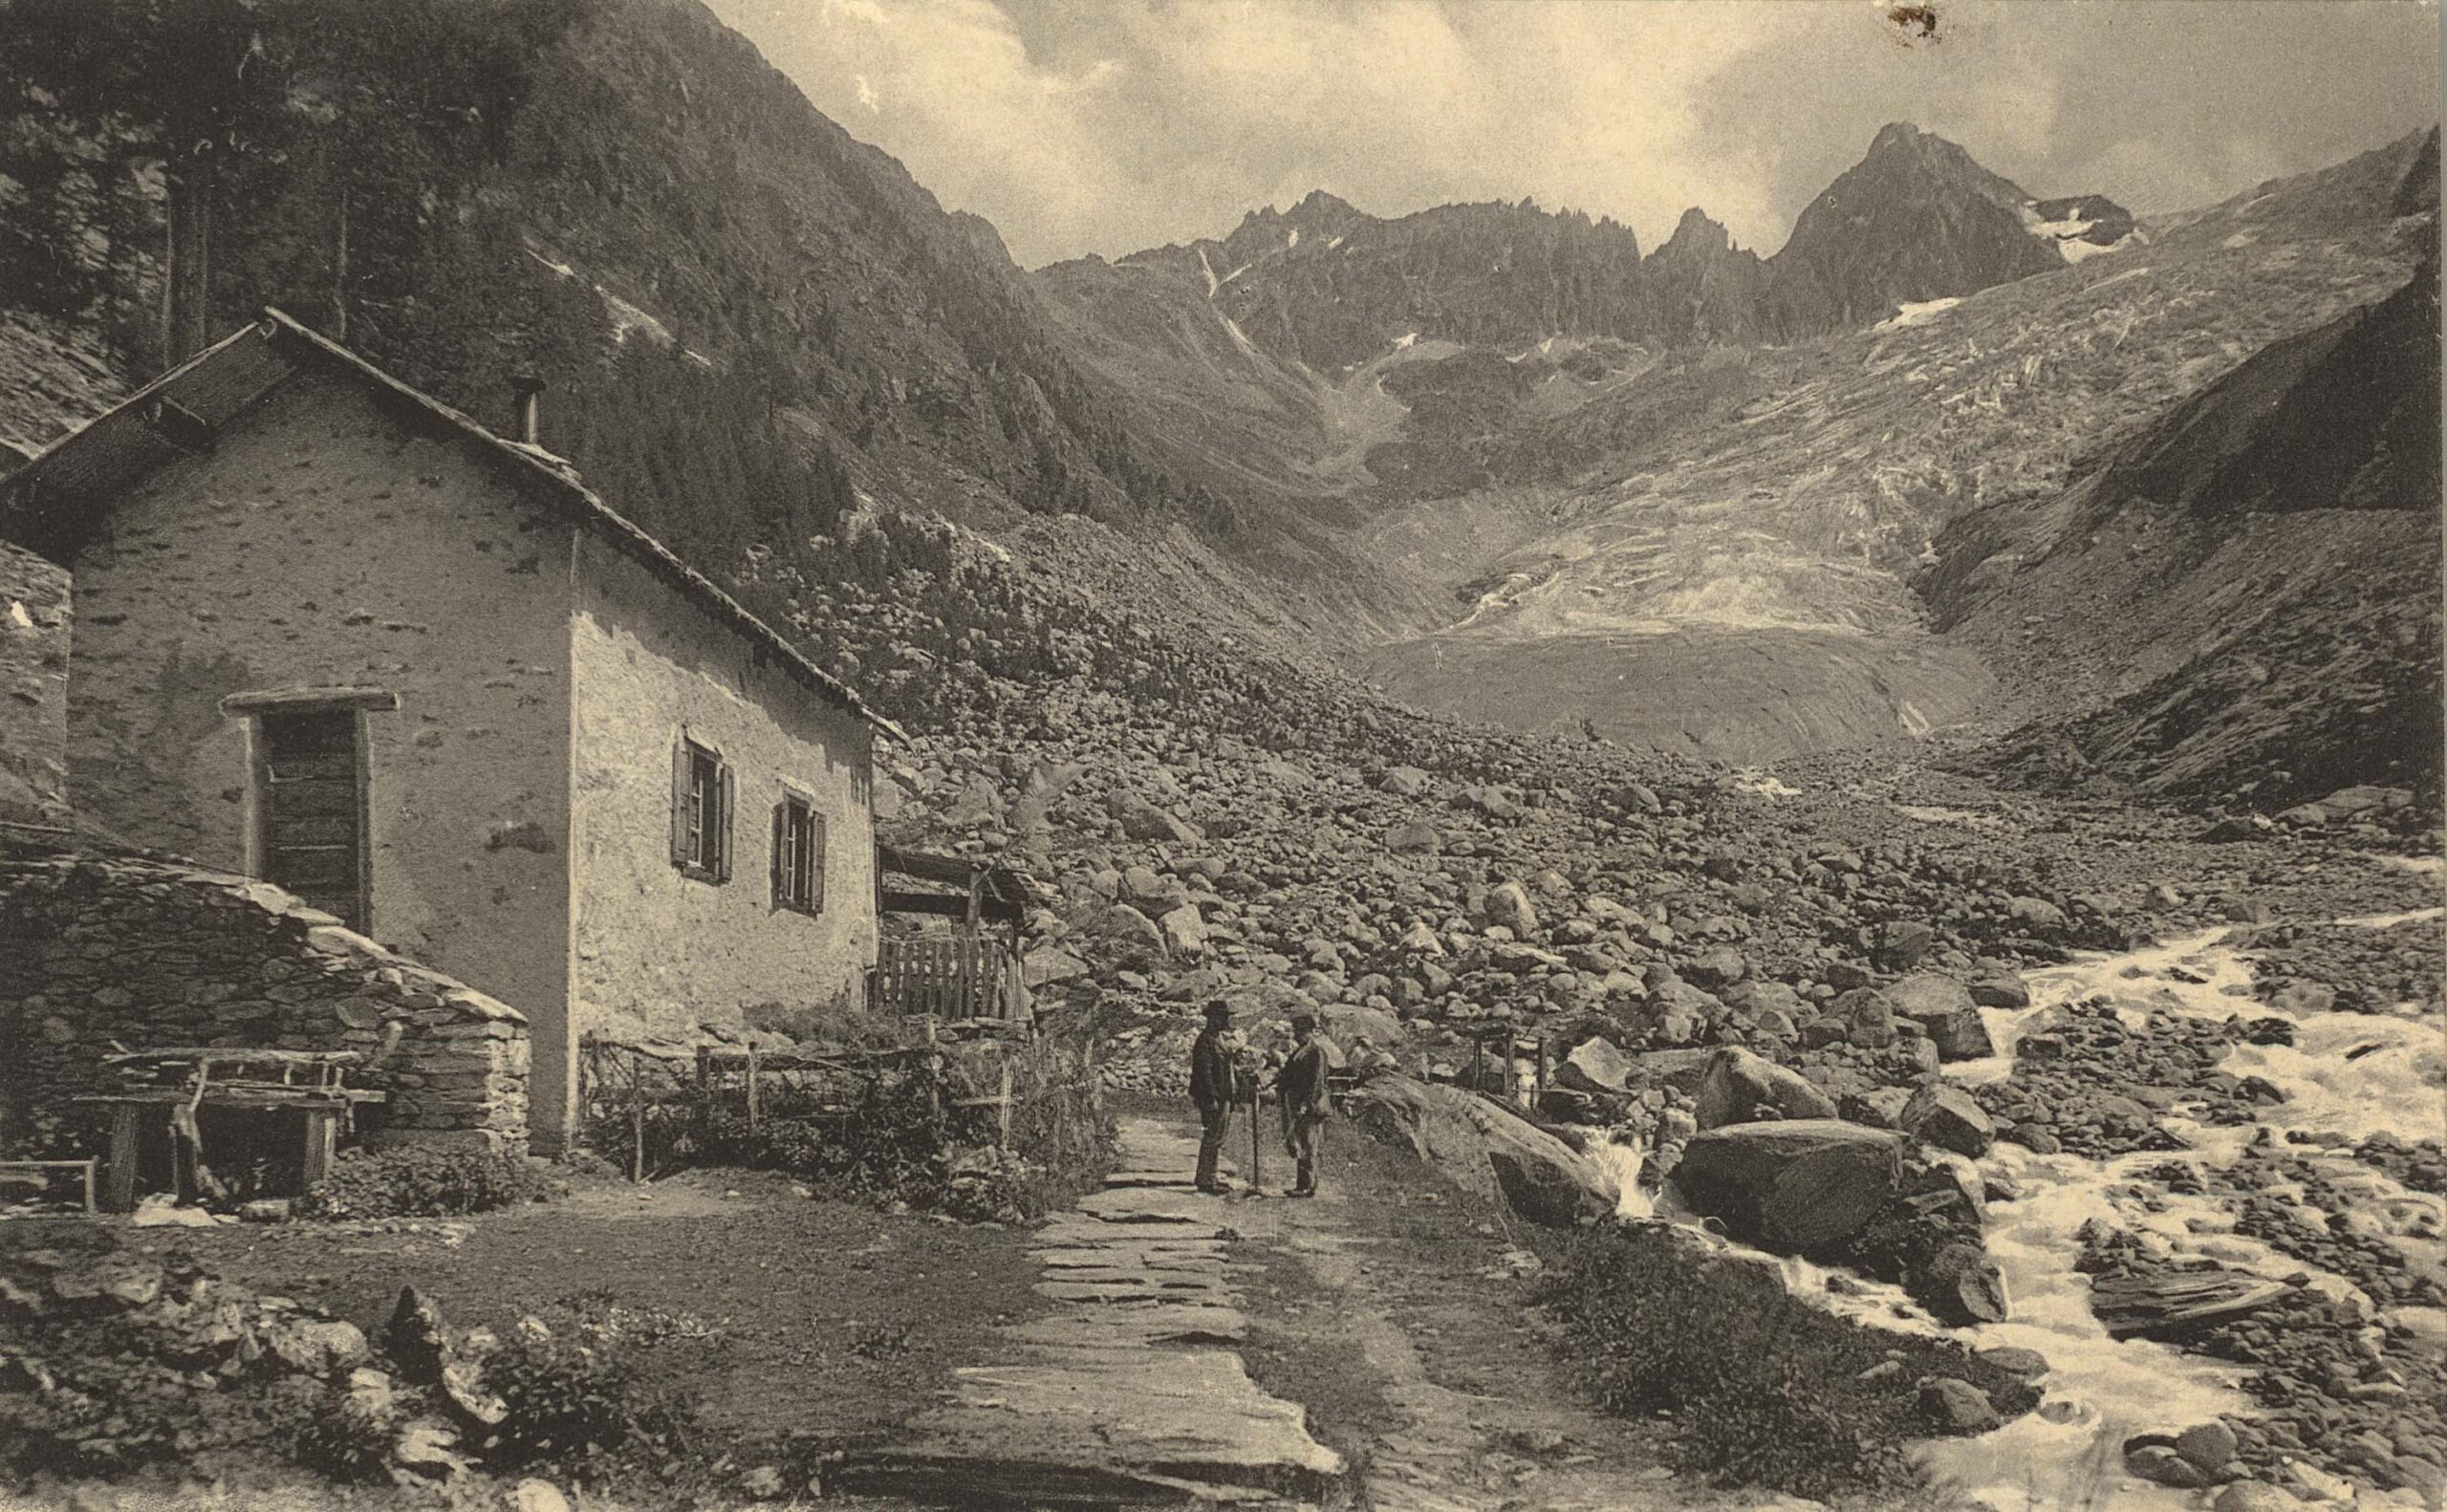 Paviljoen bij de Glacier du Trient, circa 1900. Fotograaf: Jullien Frères, Bibliotheek ETH Zürich foto Hs_1458-GK-B043-0000-0001.